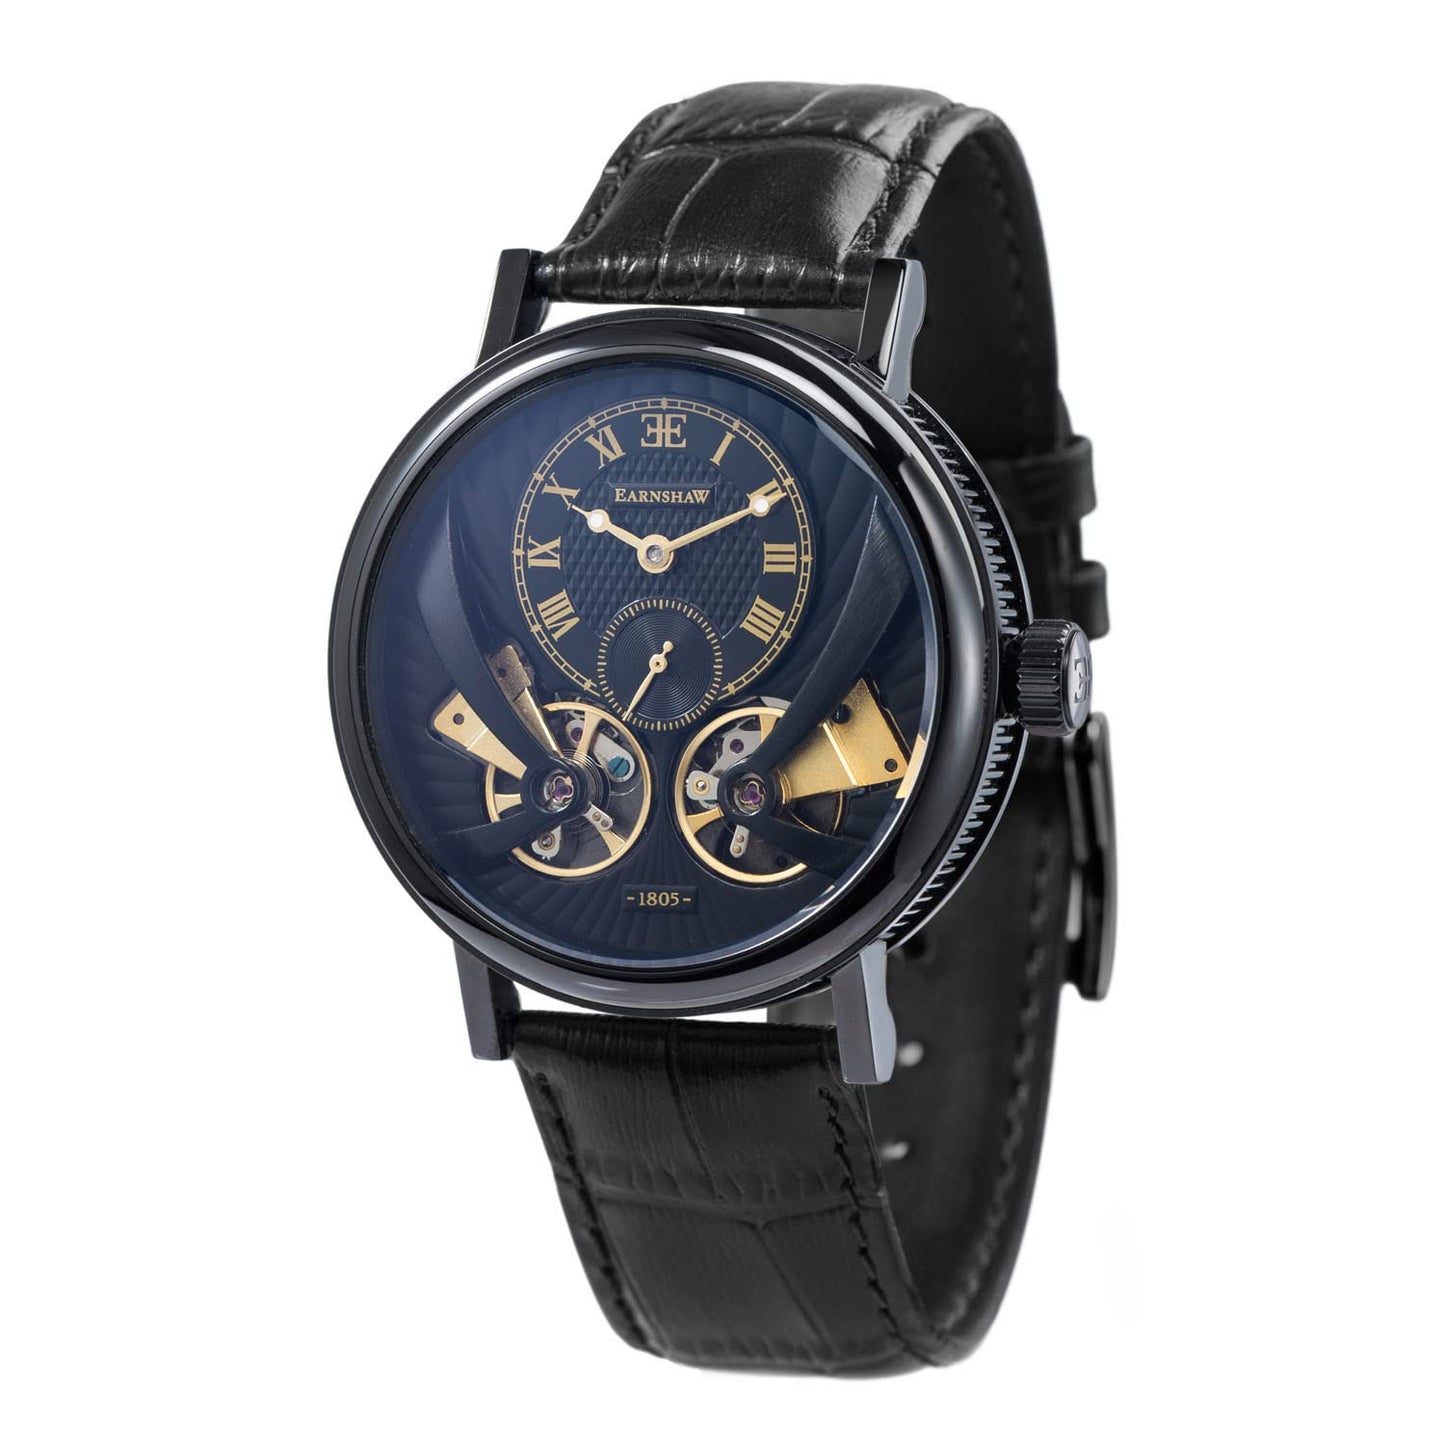 Thomas Earnshaw Beaufort Anatolia Automatic Analog Black Dial Men's Watch-ES-8059-04